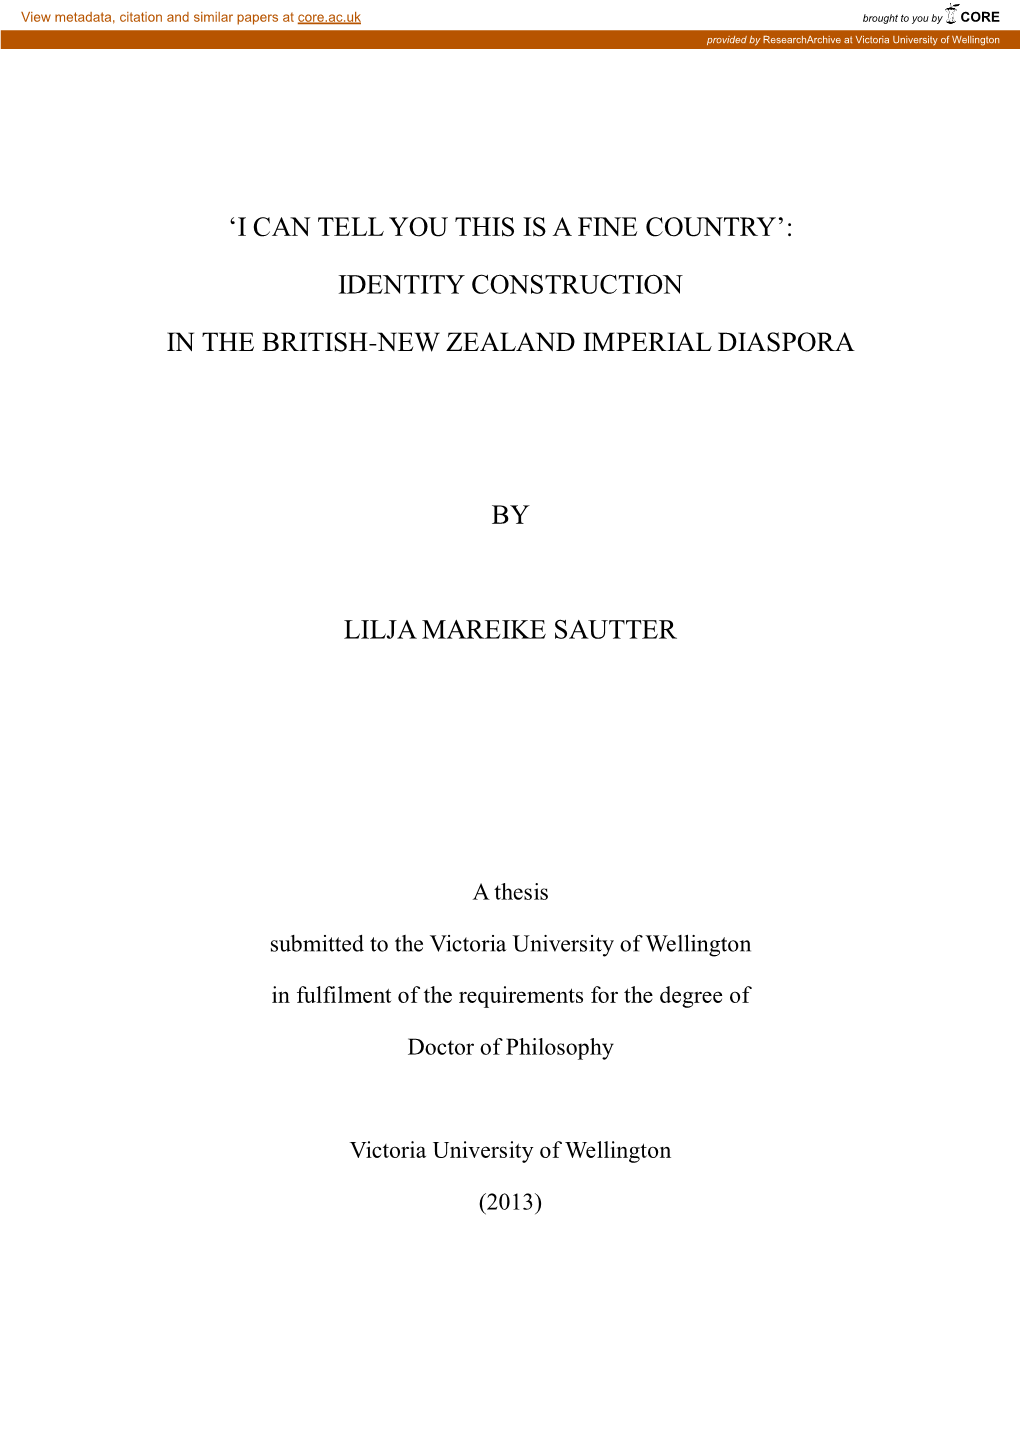 Identity Construction in the British-New Zealand Imperial Diaspora by Lilja Mareike